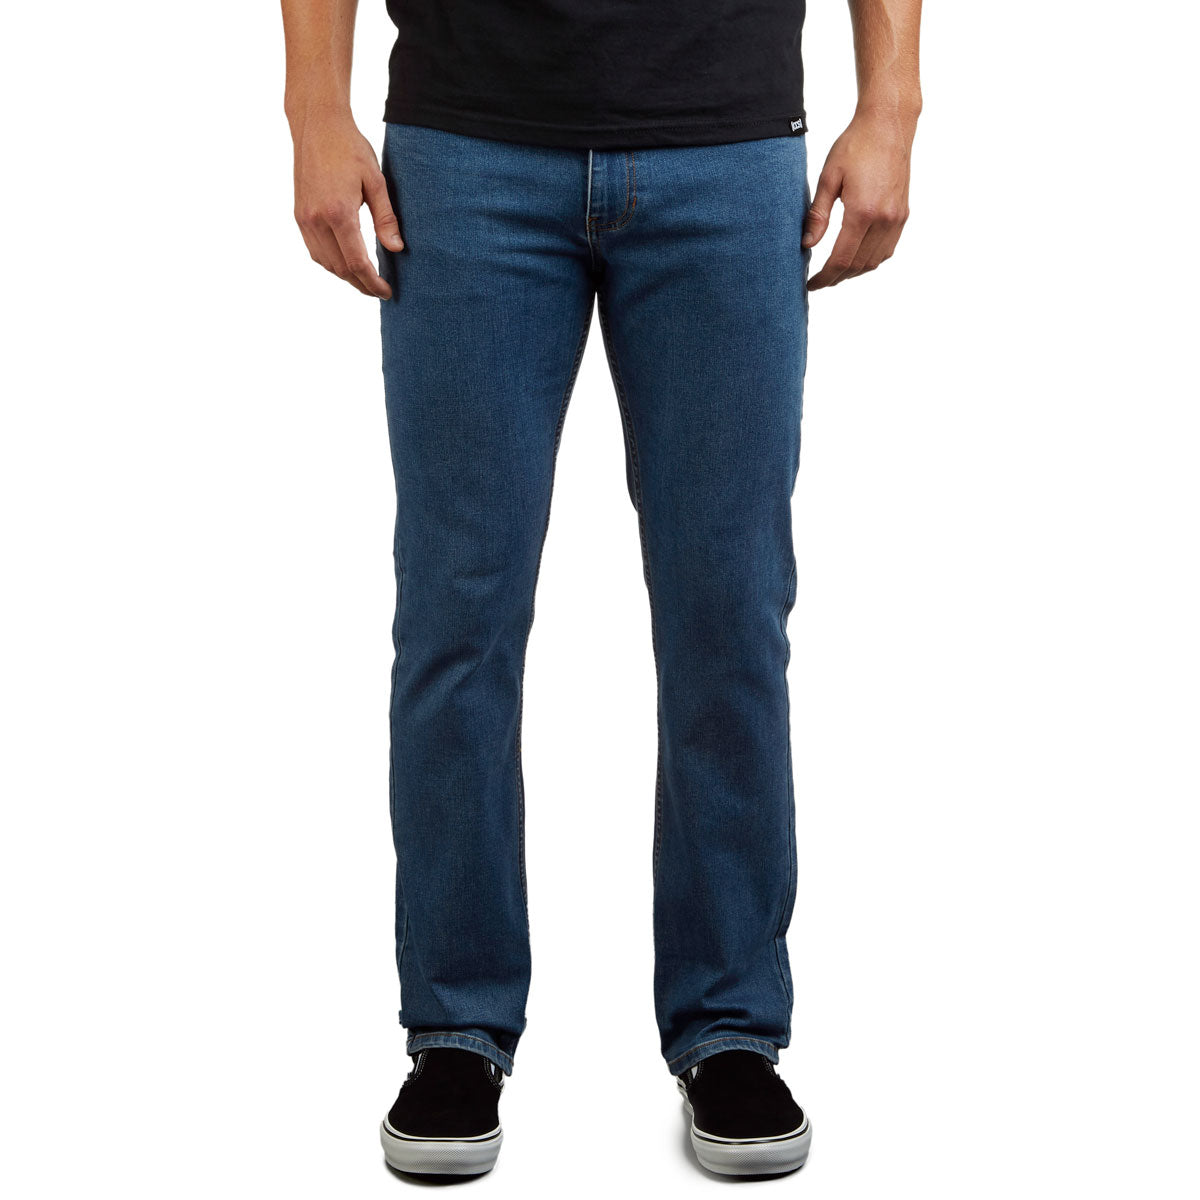 CCS Standard Plus Slim Denim Jeans - New Rinse image 1